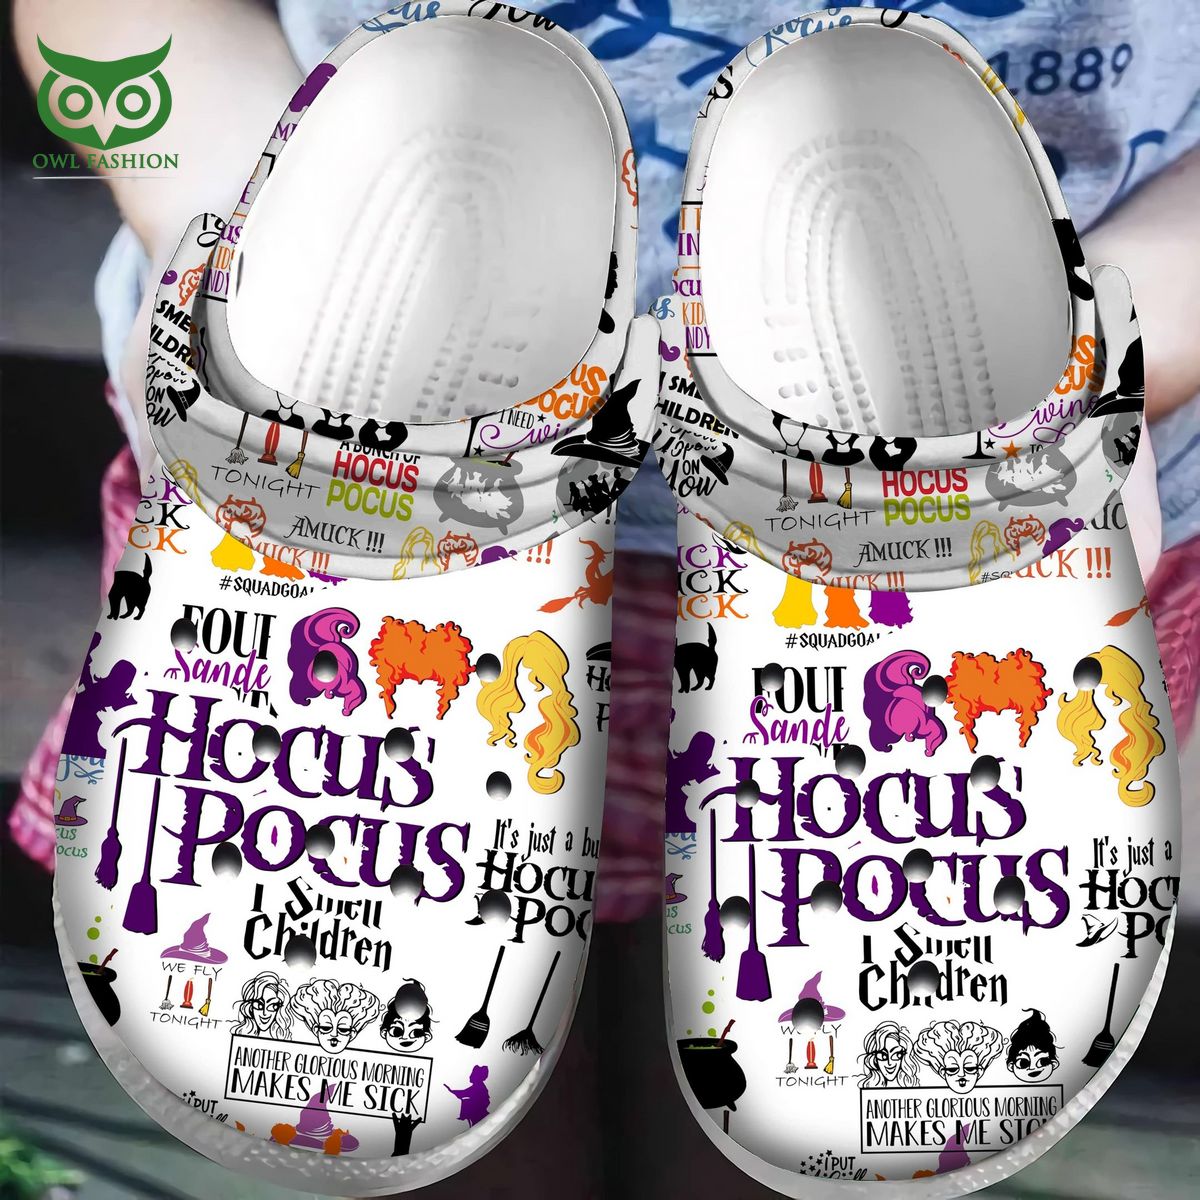 Hocus Pocus Horror Comedy Limited Crocs Loving click